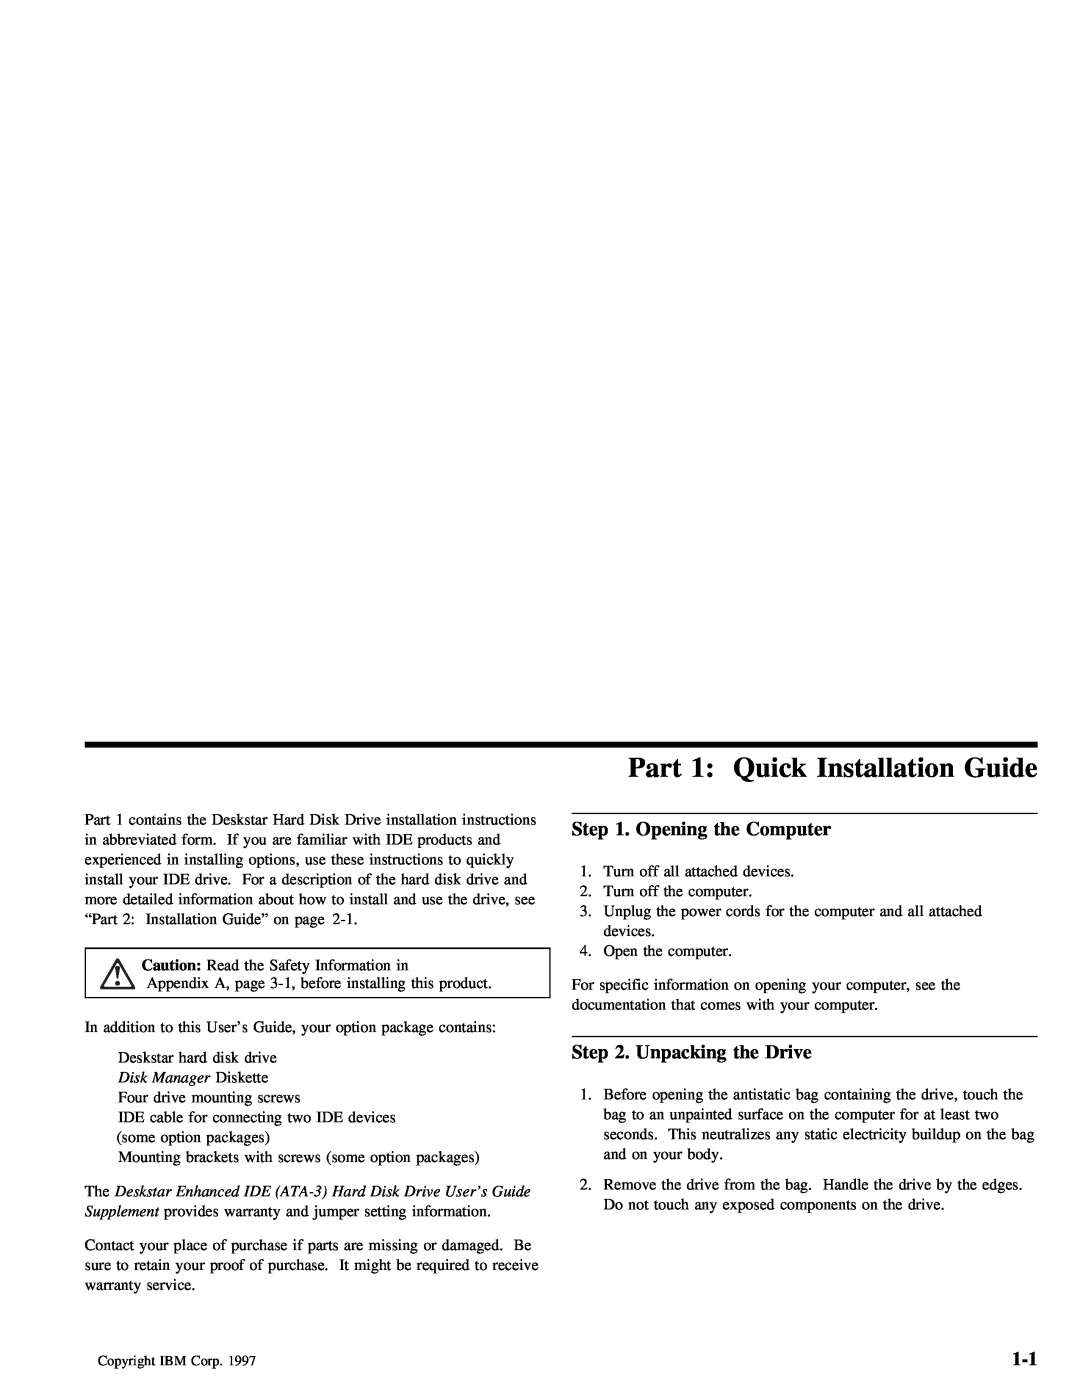 IBM ATA-3 manual Part, Installation, Quick, Guide, Step 